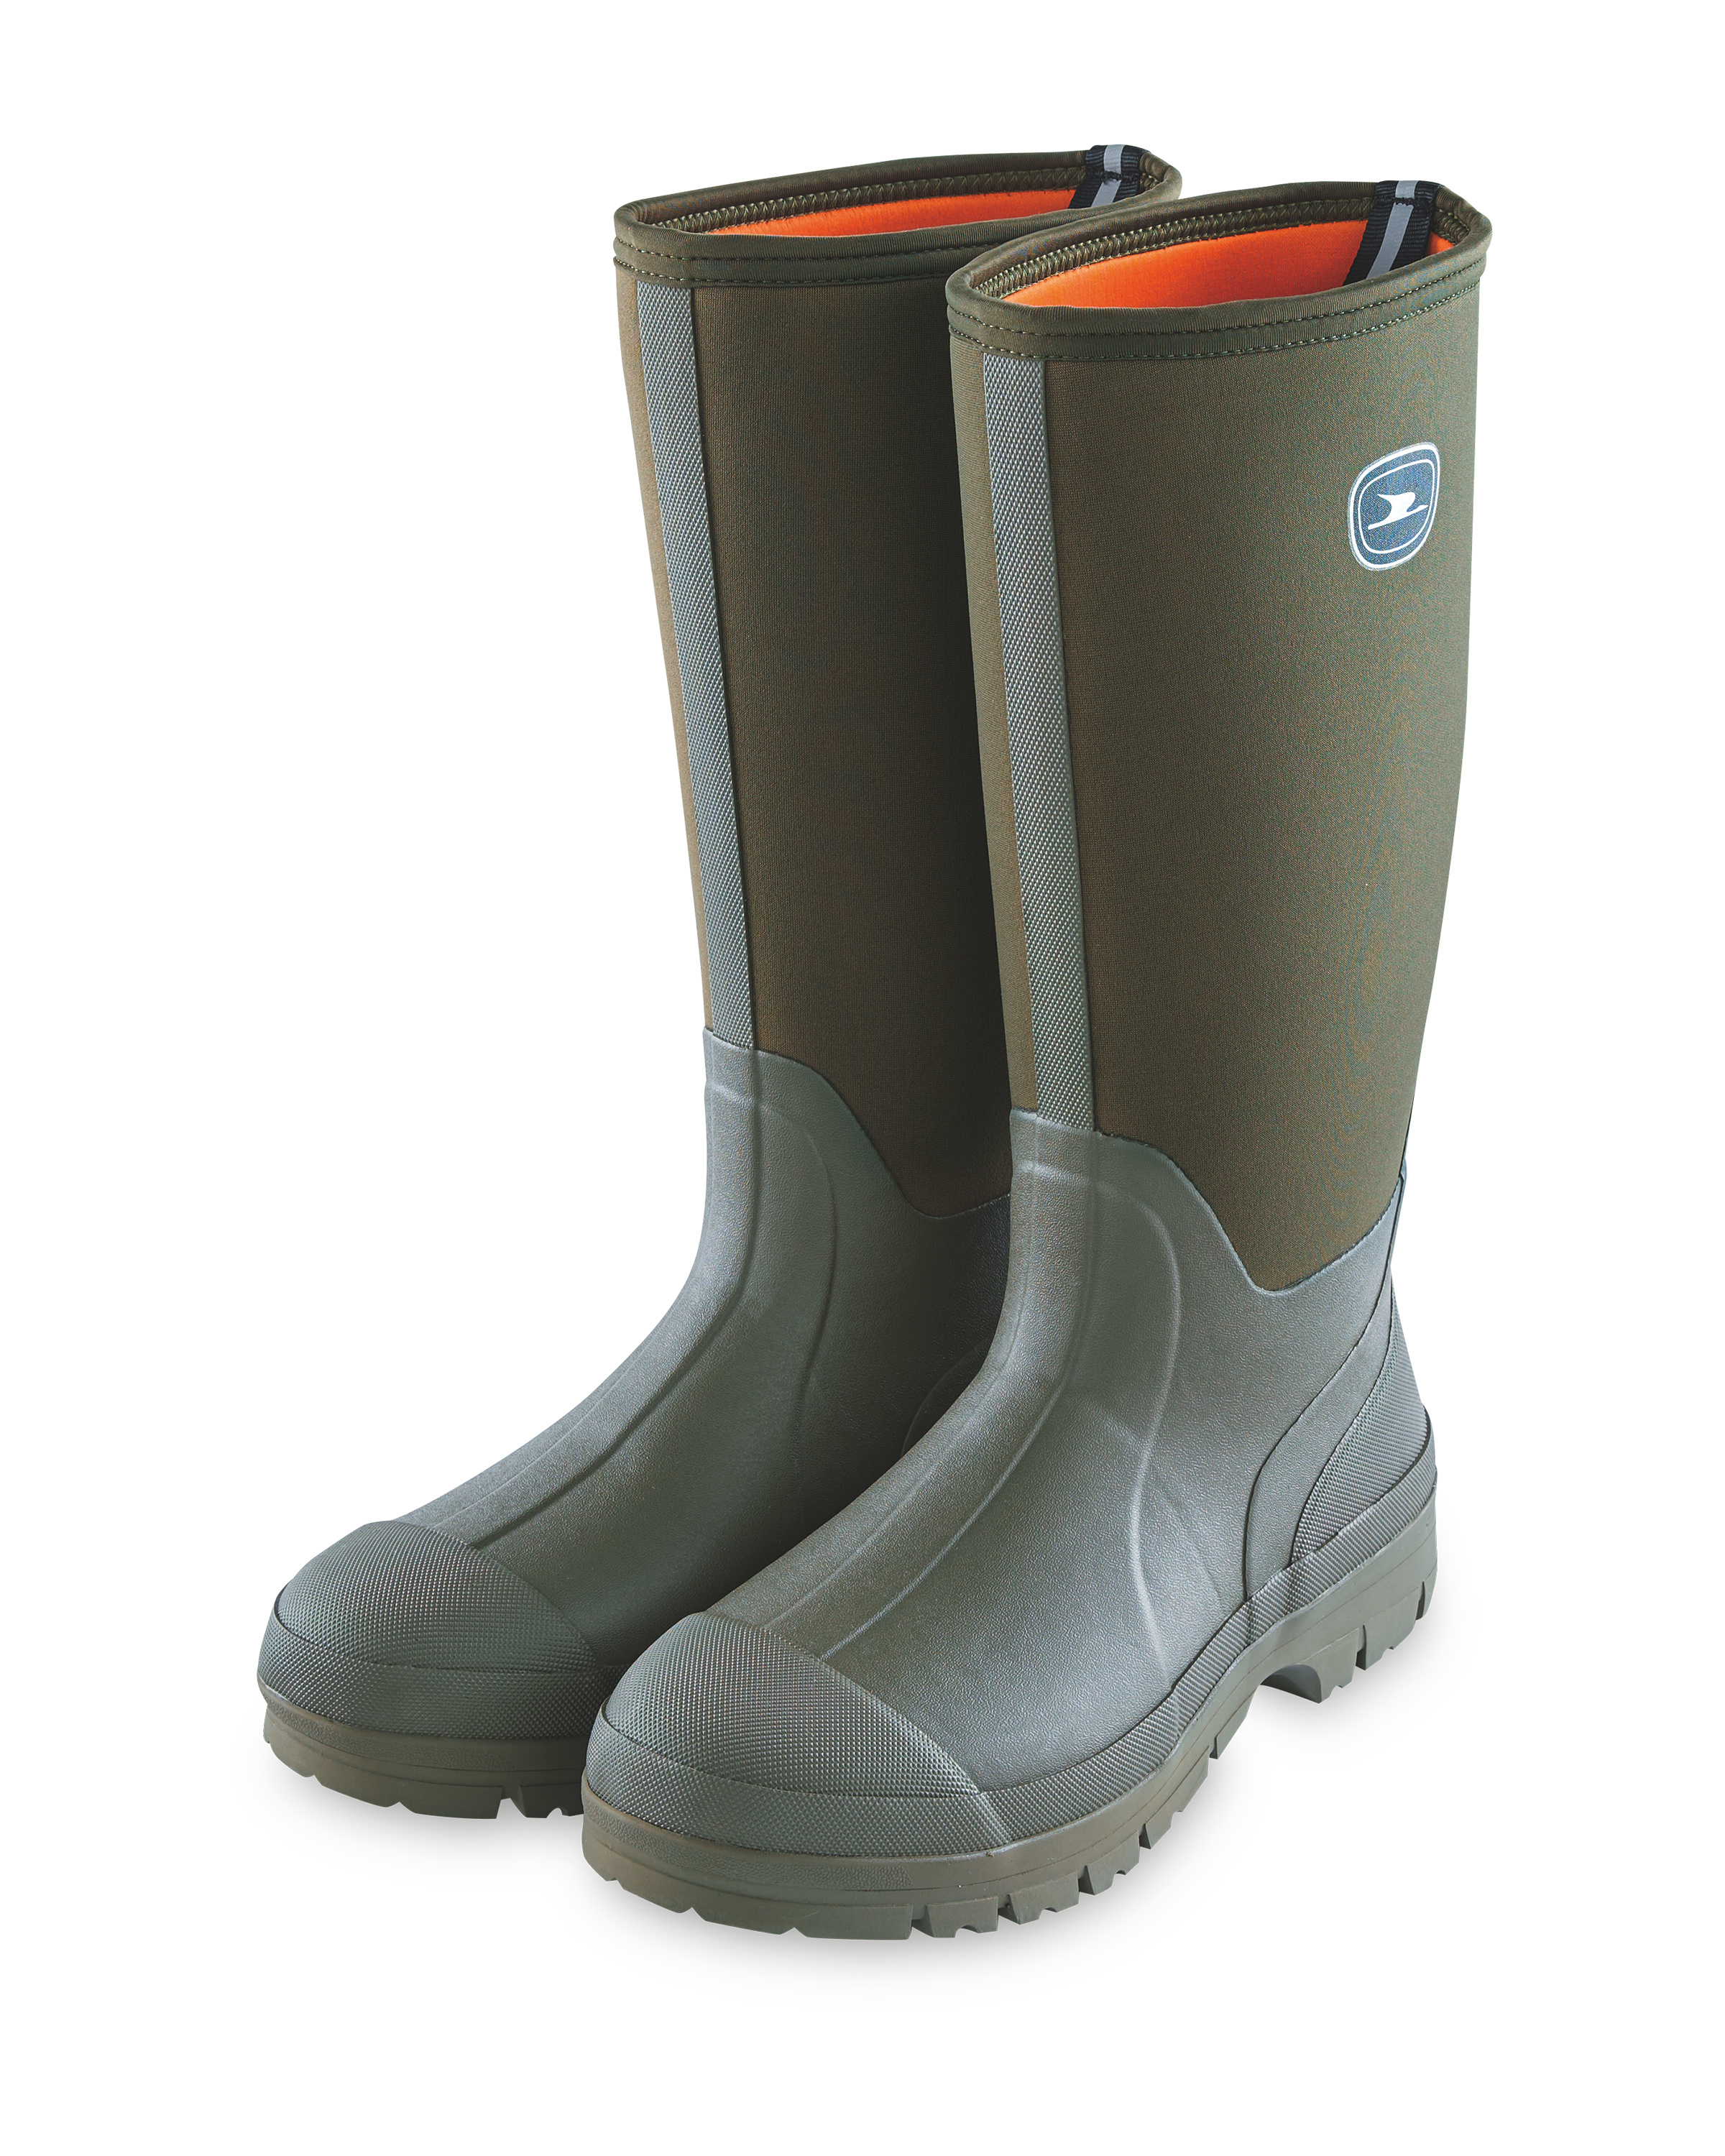 Crane Green Neoprene Fishing Boots - ALDI UK